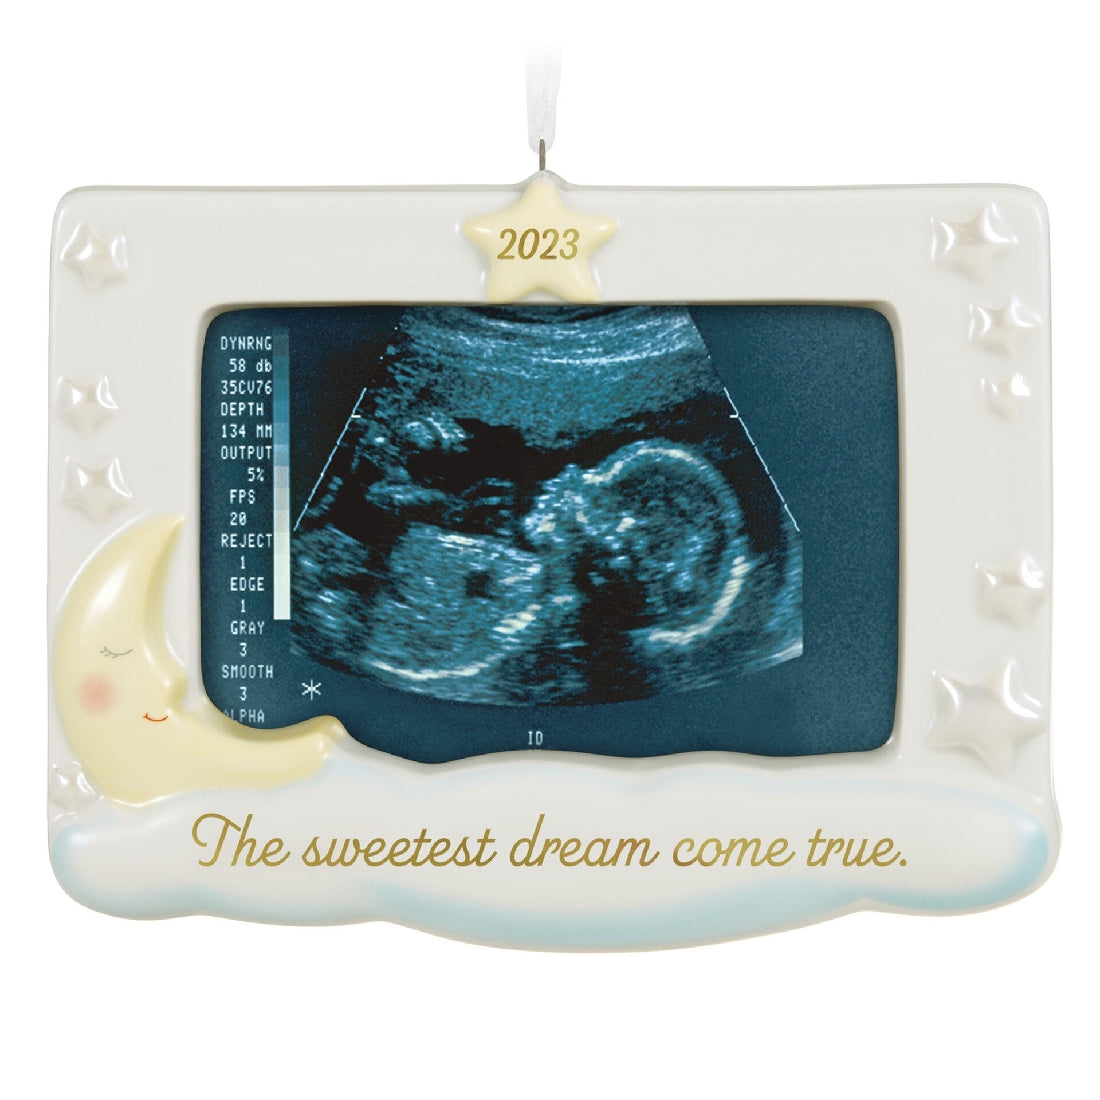 Sweetest Dream Come True 2023 Hallmark Keepsake Ornament